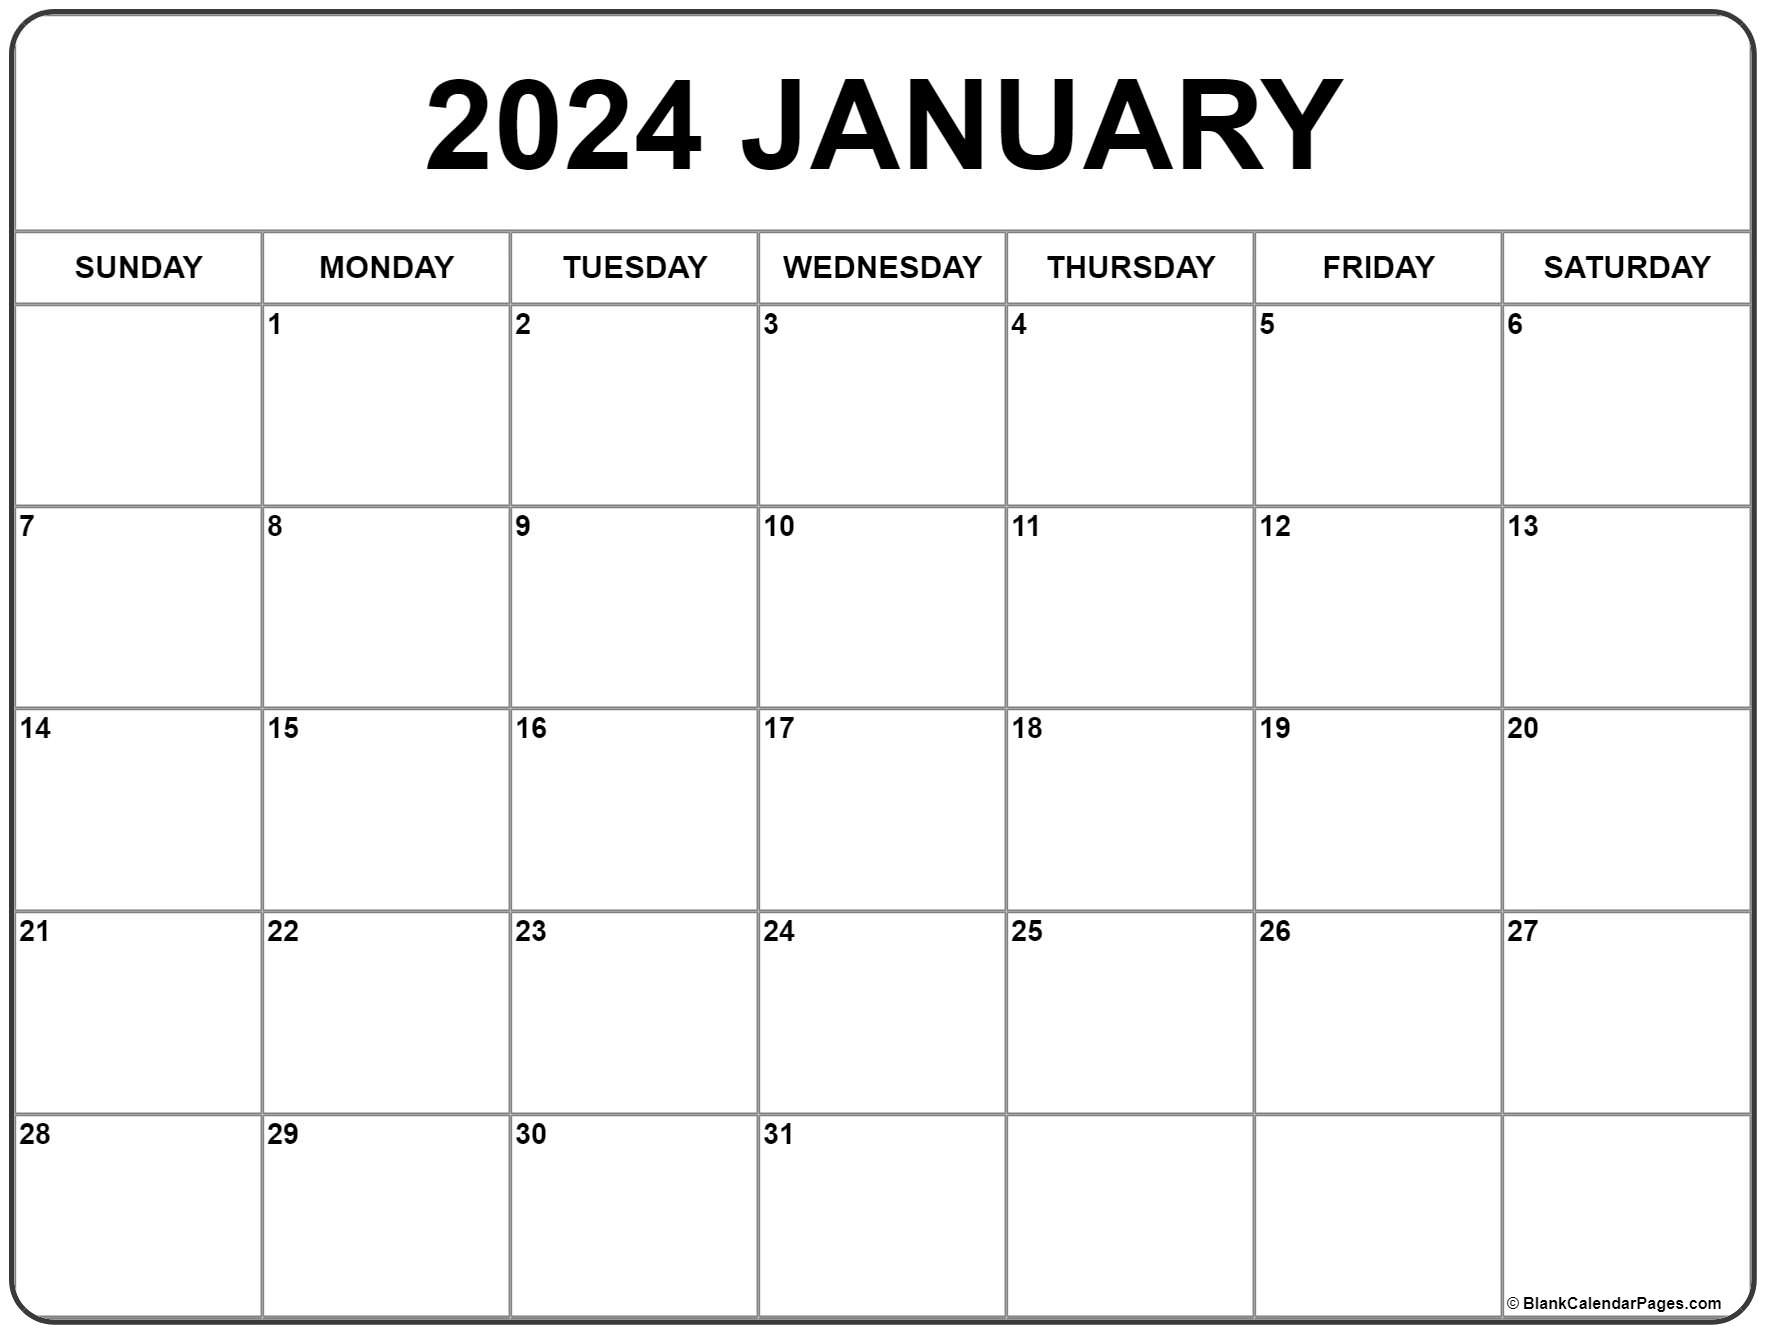 January 2024 Calendar | Free Printable Calendar for Free Jan 2024 Printable Calendar